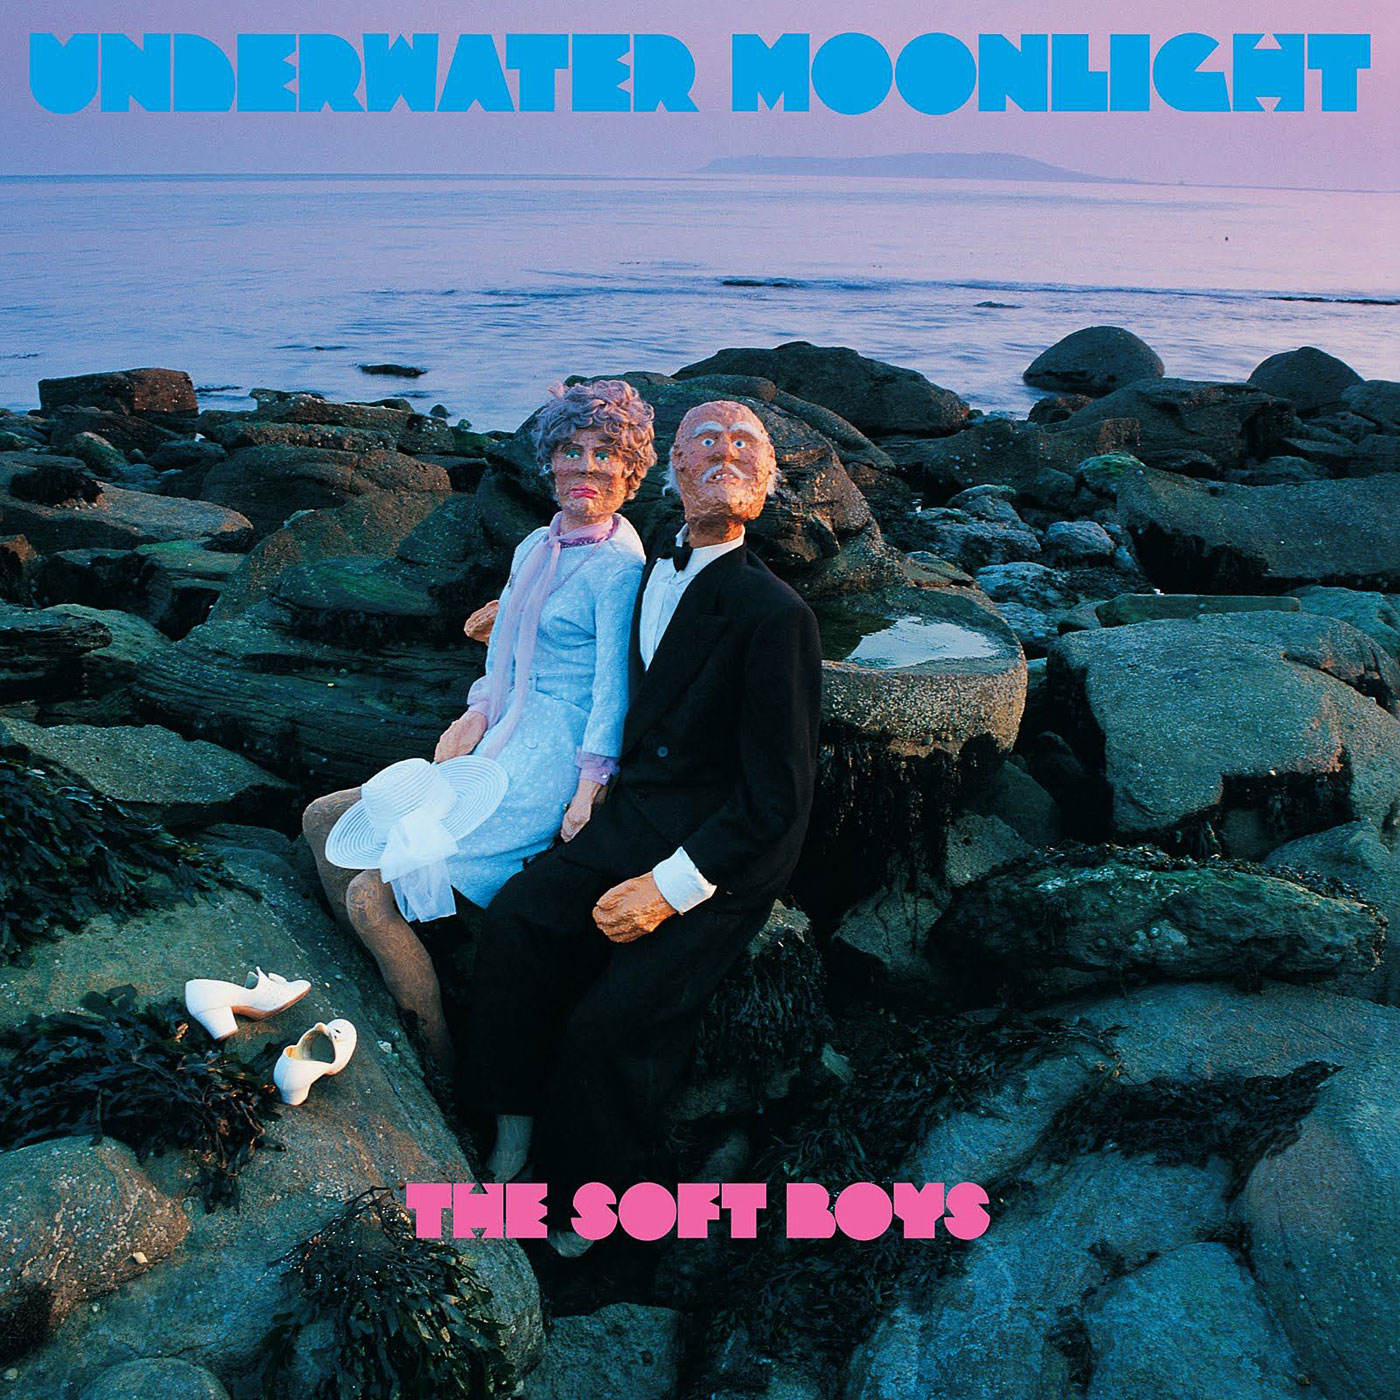 460 The Soft Boys – Underwater Moonlight